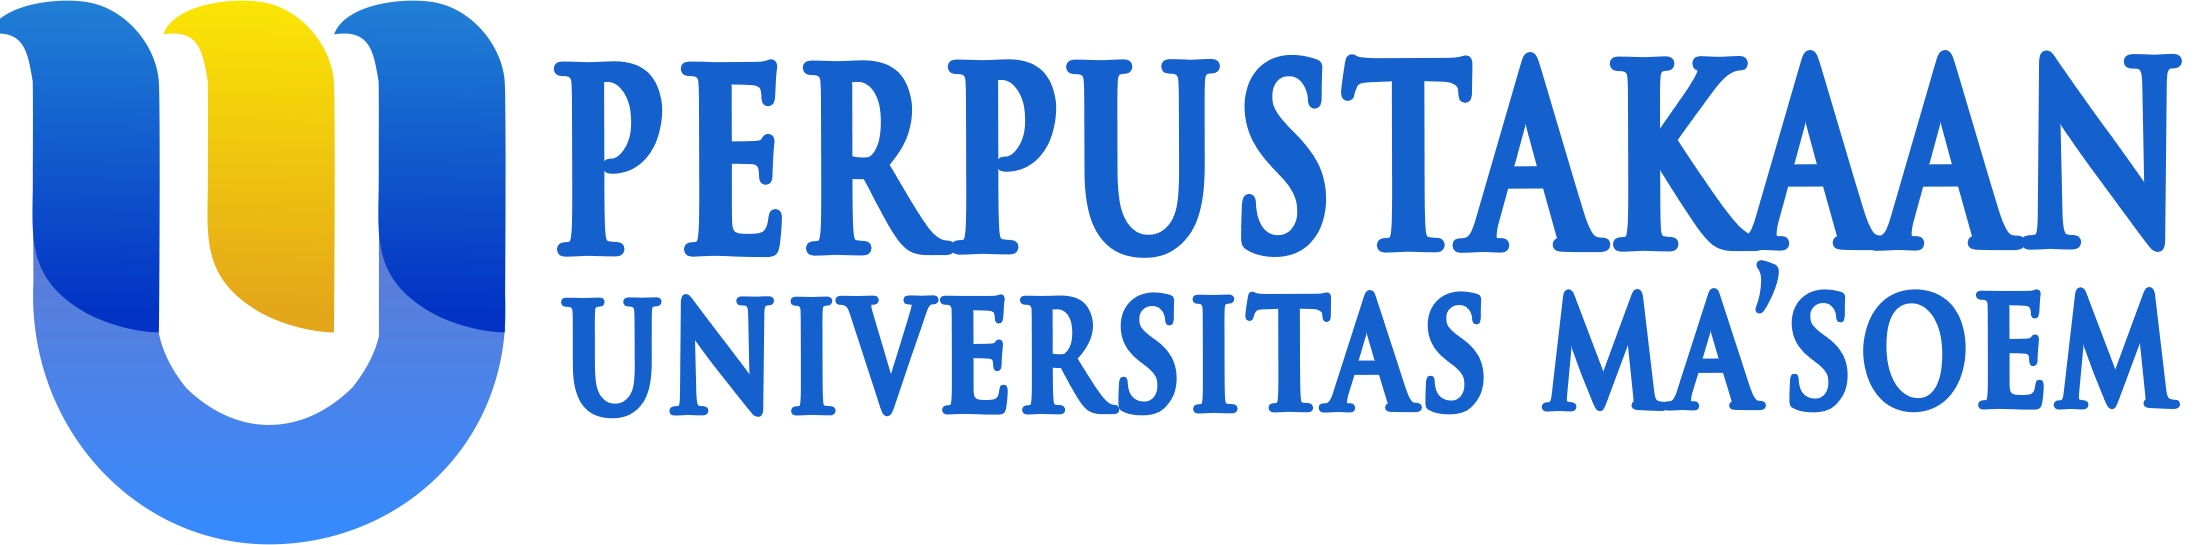 Universitas Ma’soem Logo